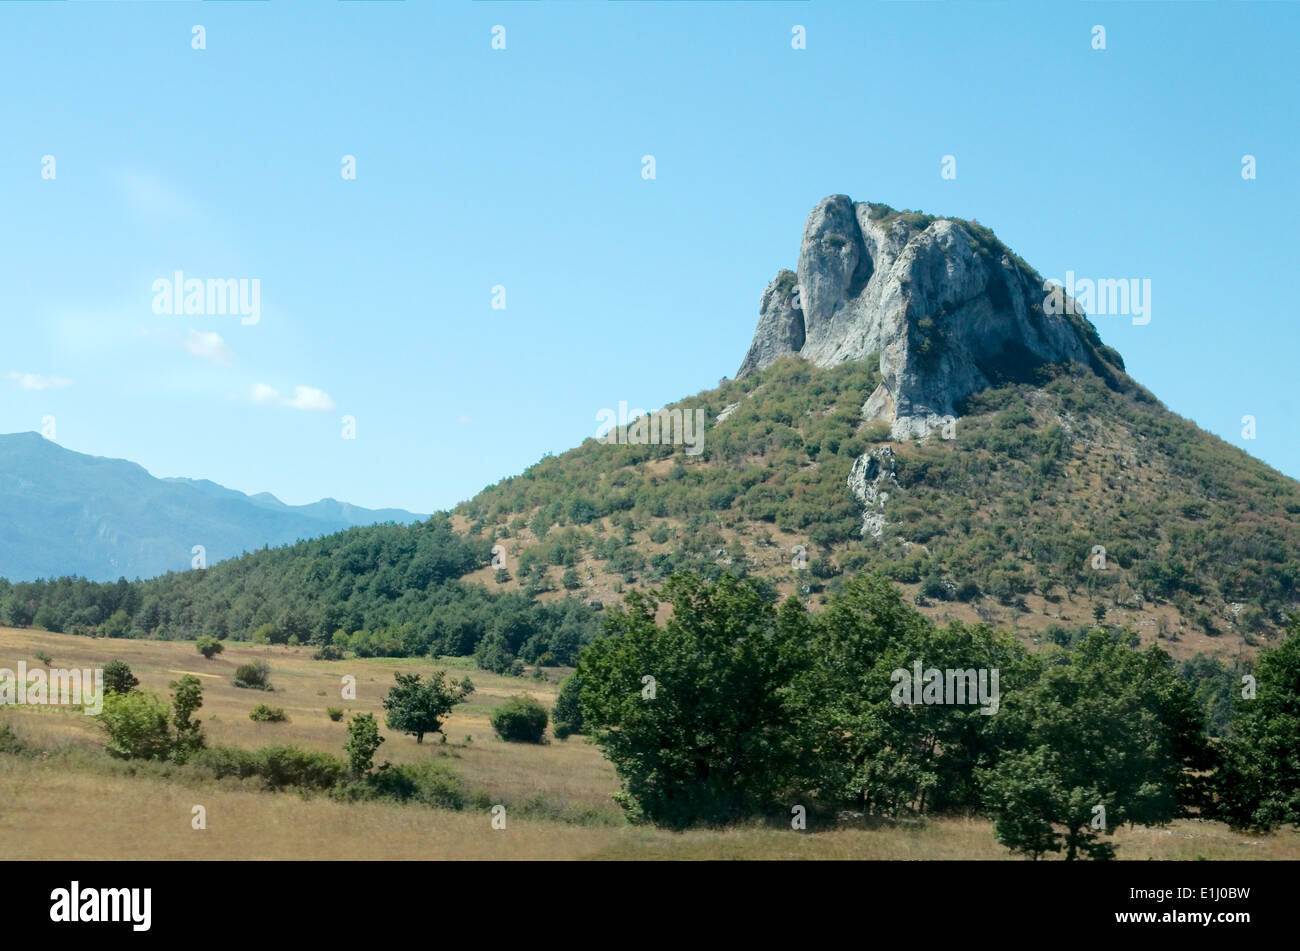 Summertime Croatian Landscape of a Giant Rock Stock Photo